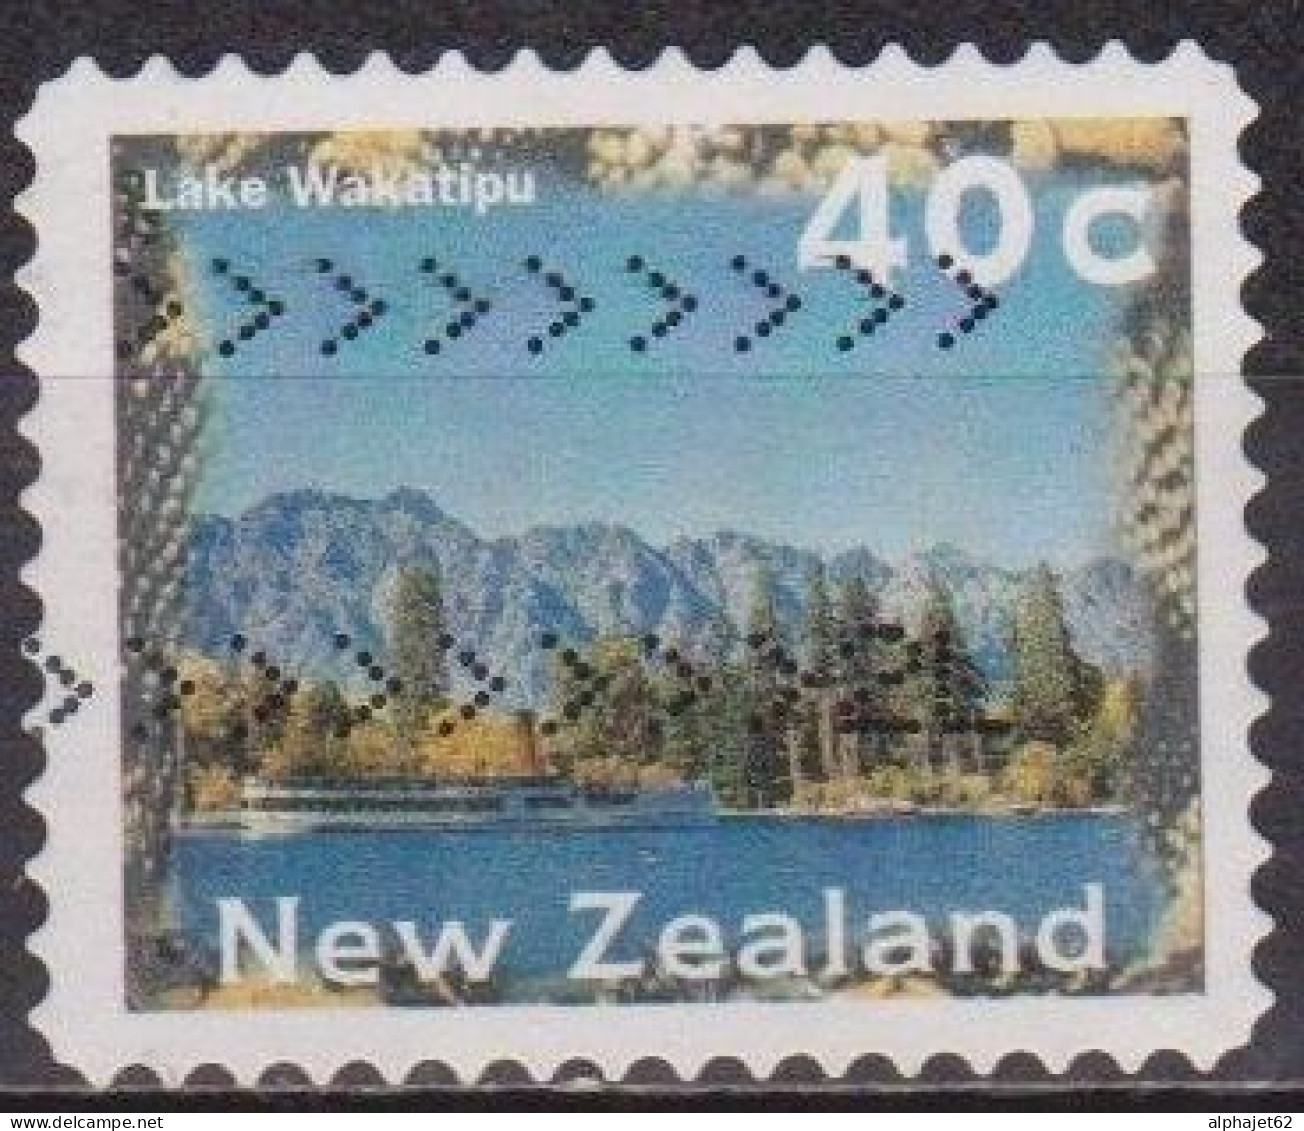 Lake Wakatipu - NOUVELLE ZELANDE - Paysages - N° 1462a - 1996 - Used Stamps